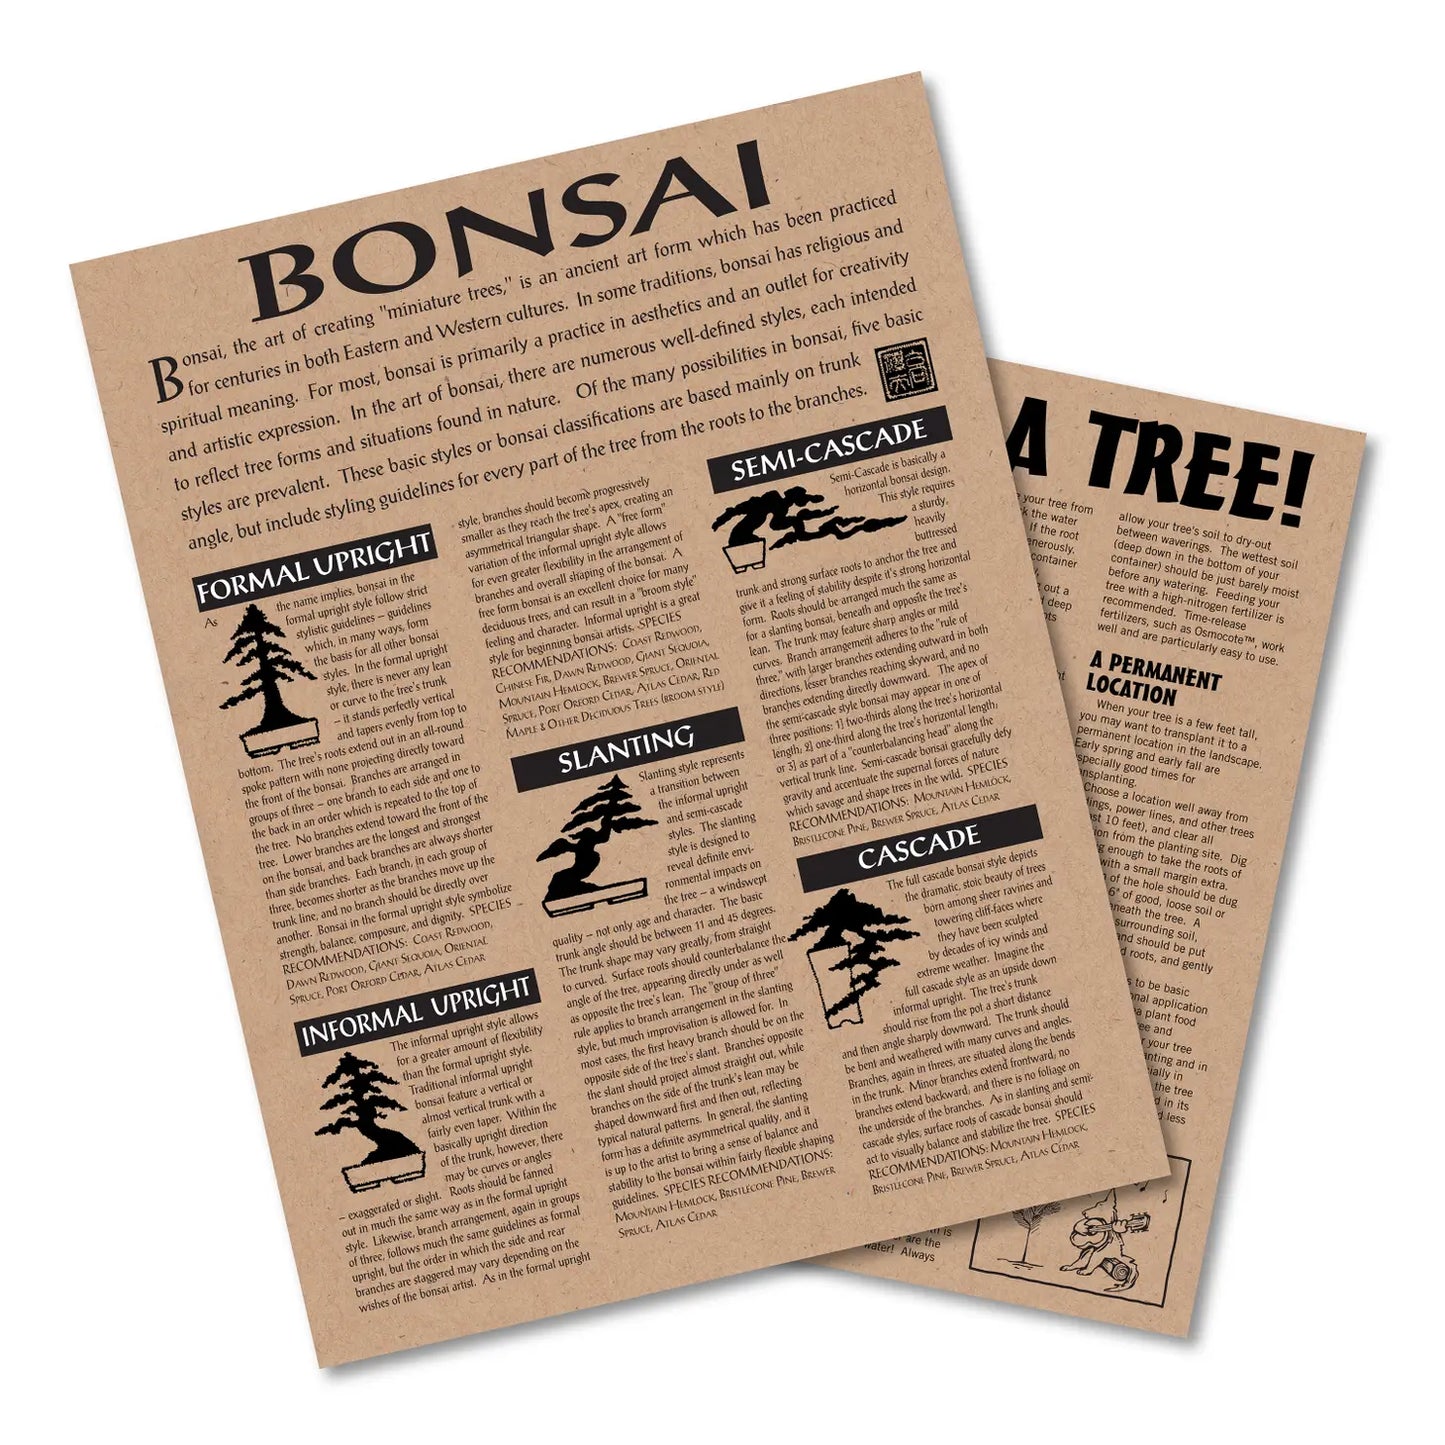 Chinese Juniper Bonsai Tree | Seed Grow Kit